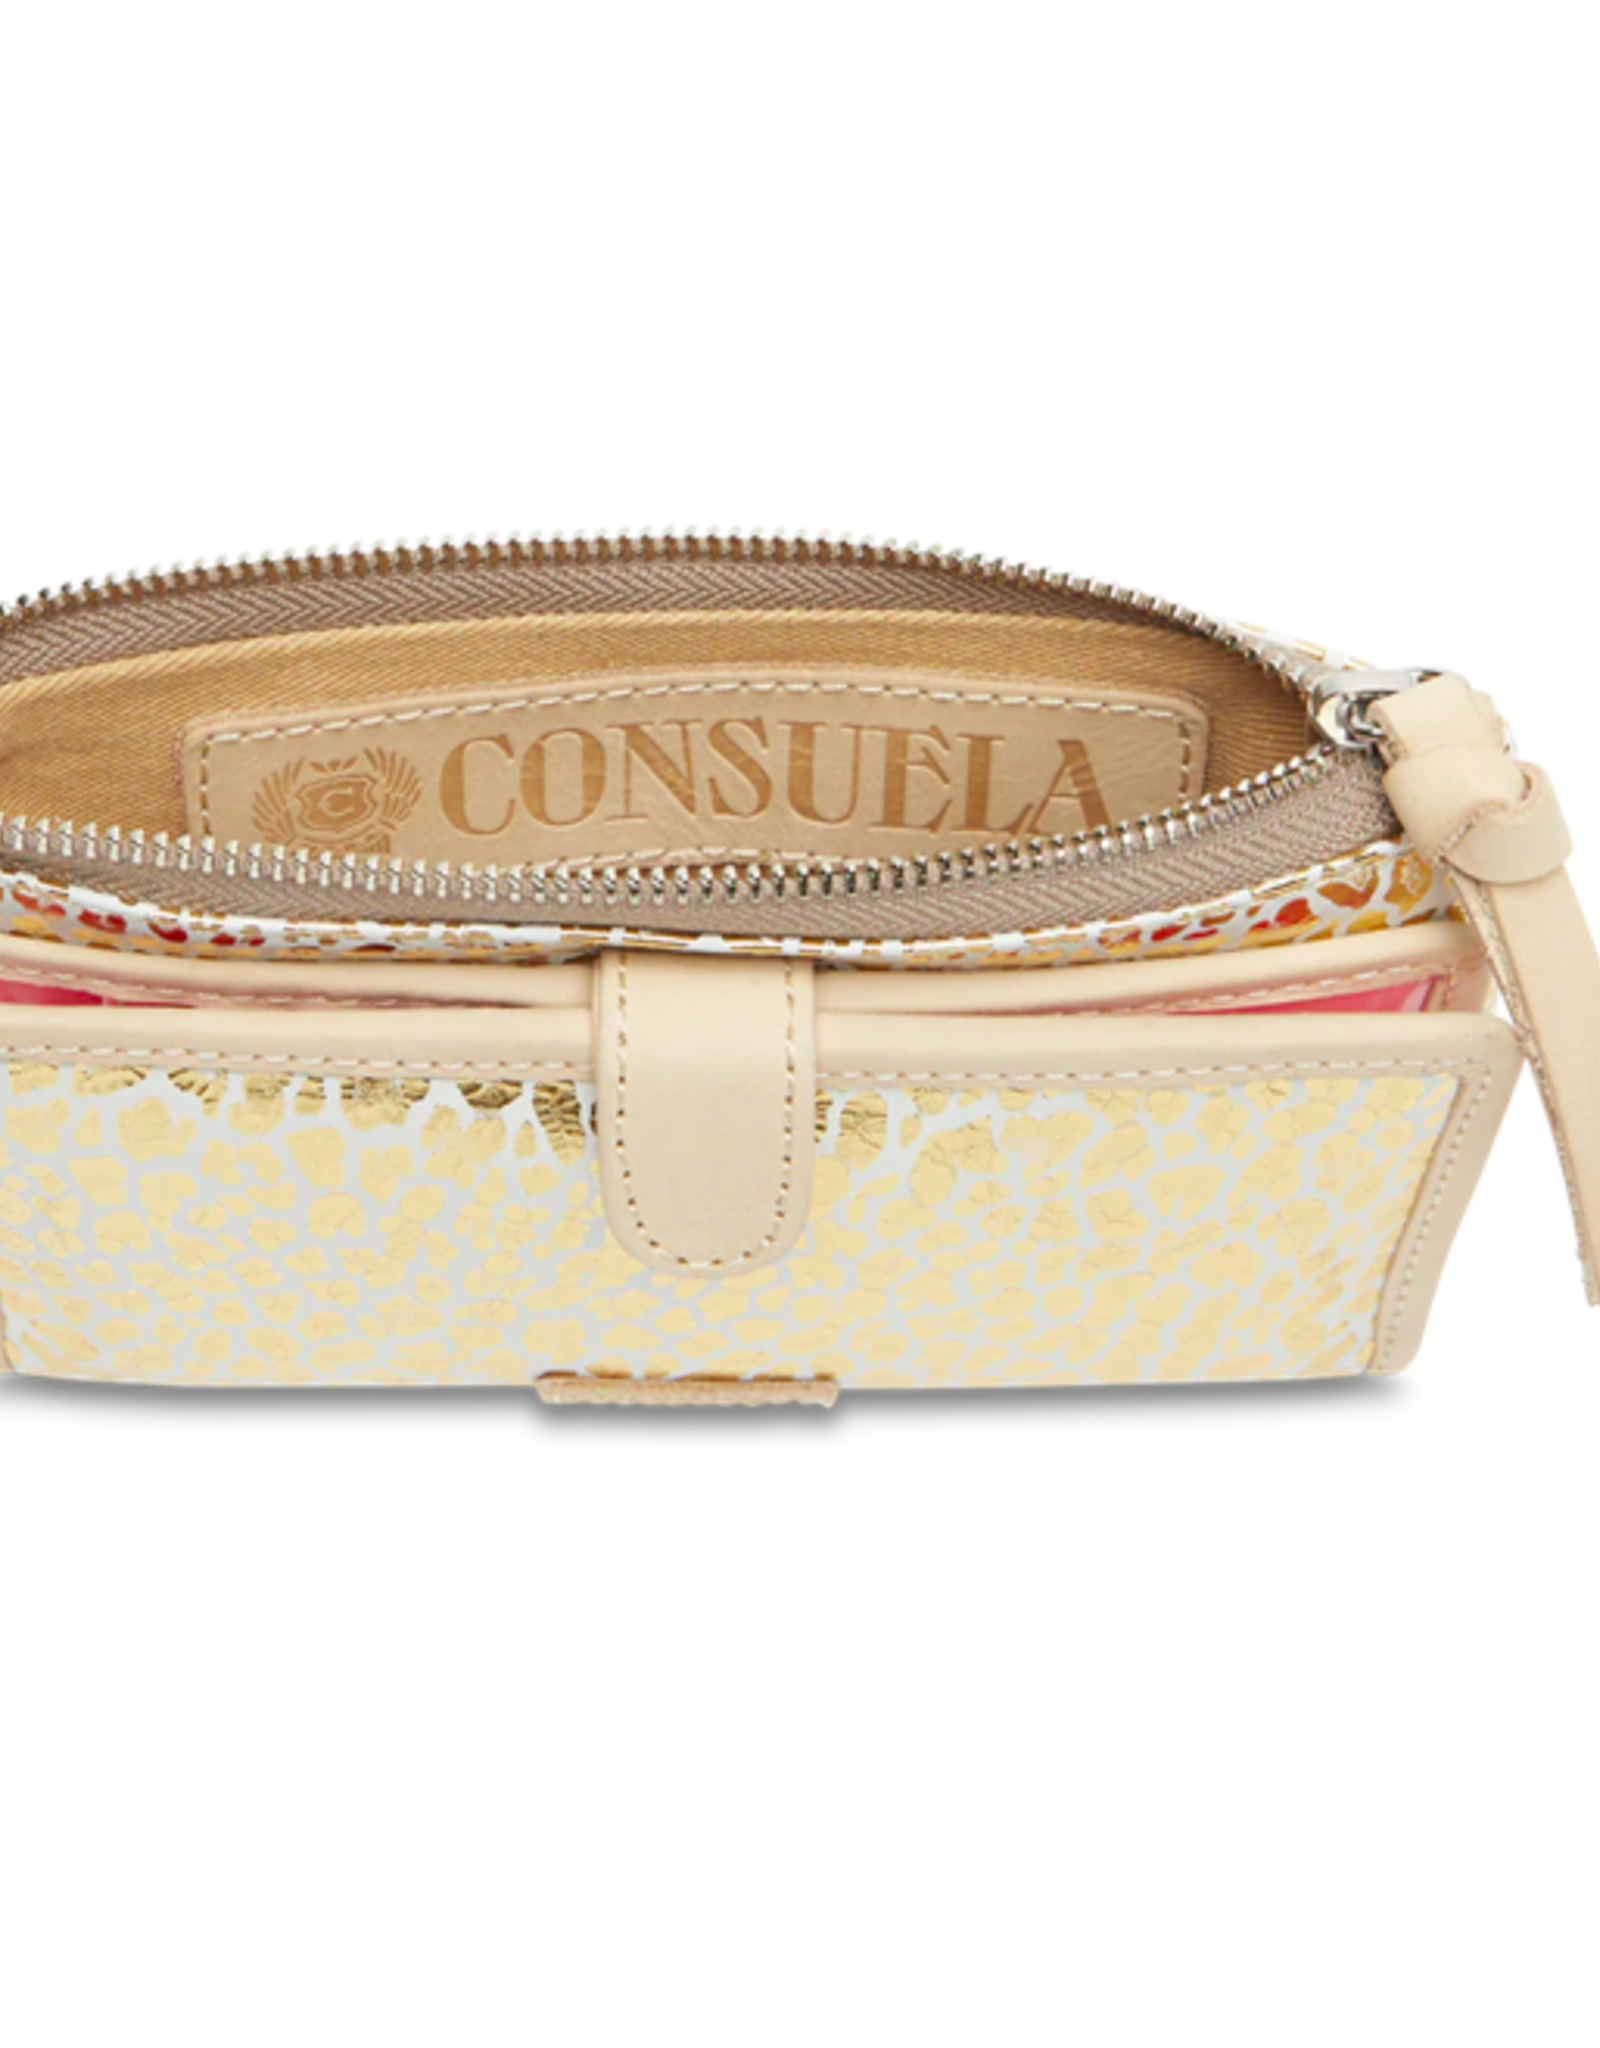 Consuela Consuela Slim Wallet Kit